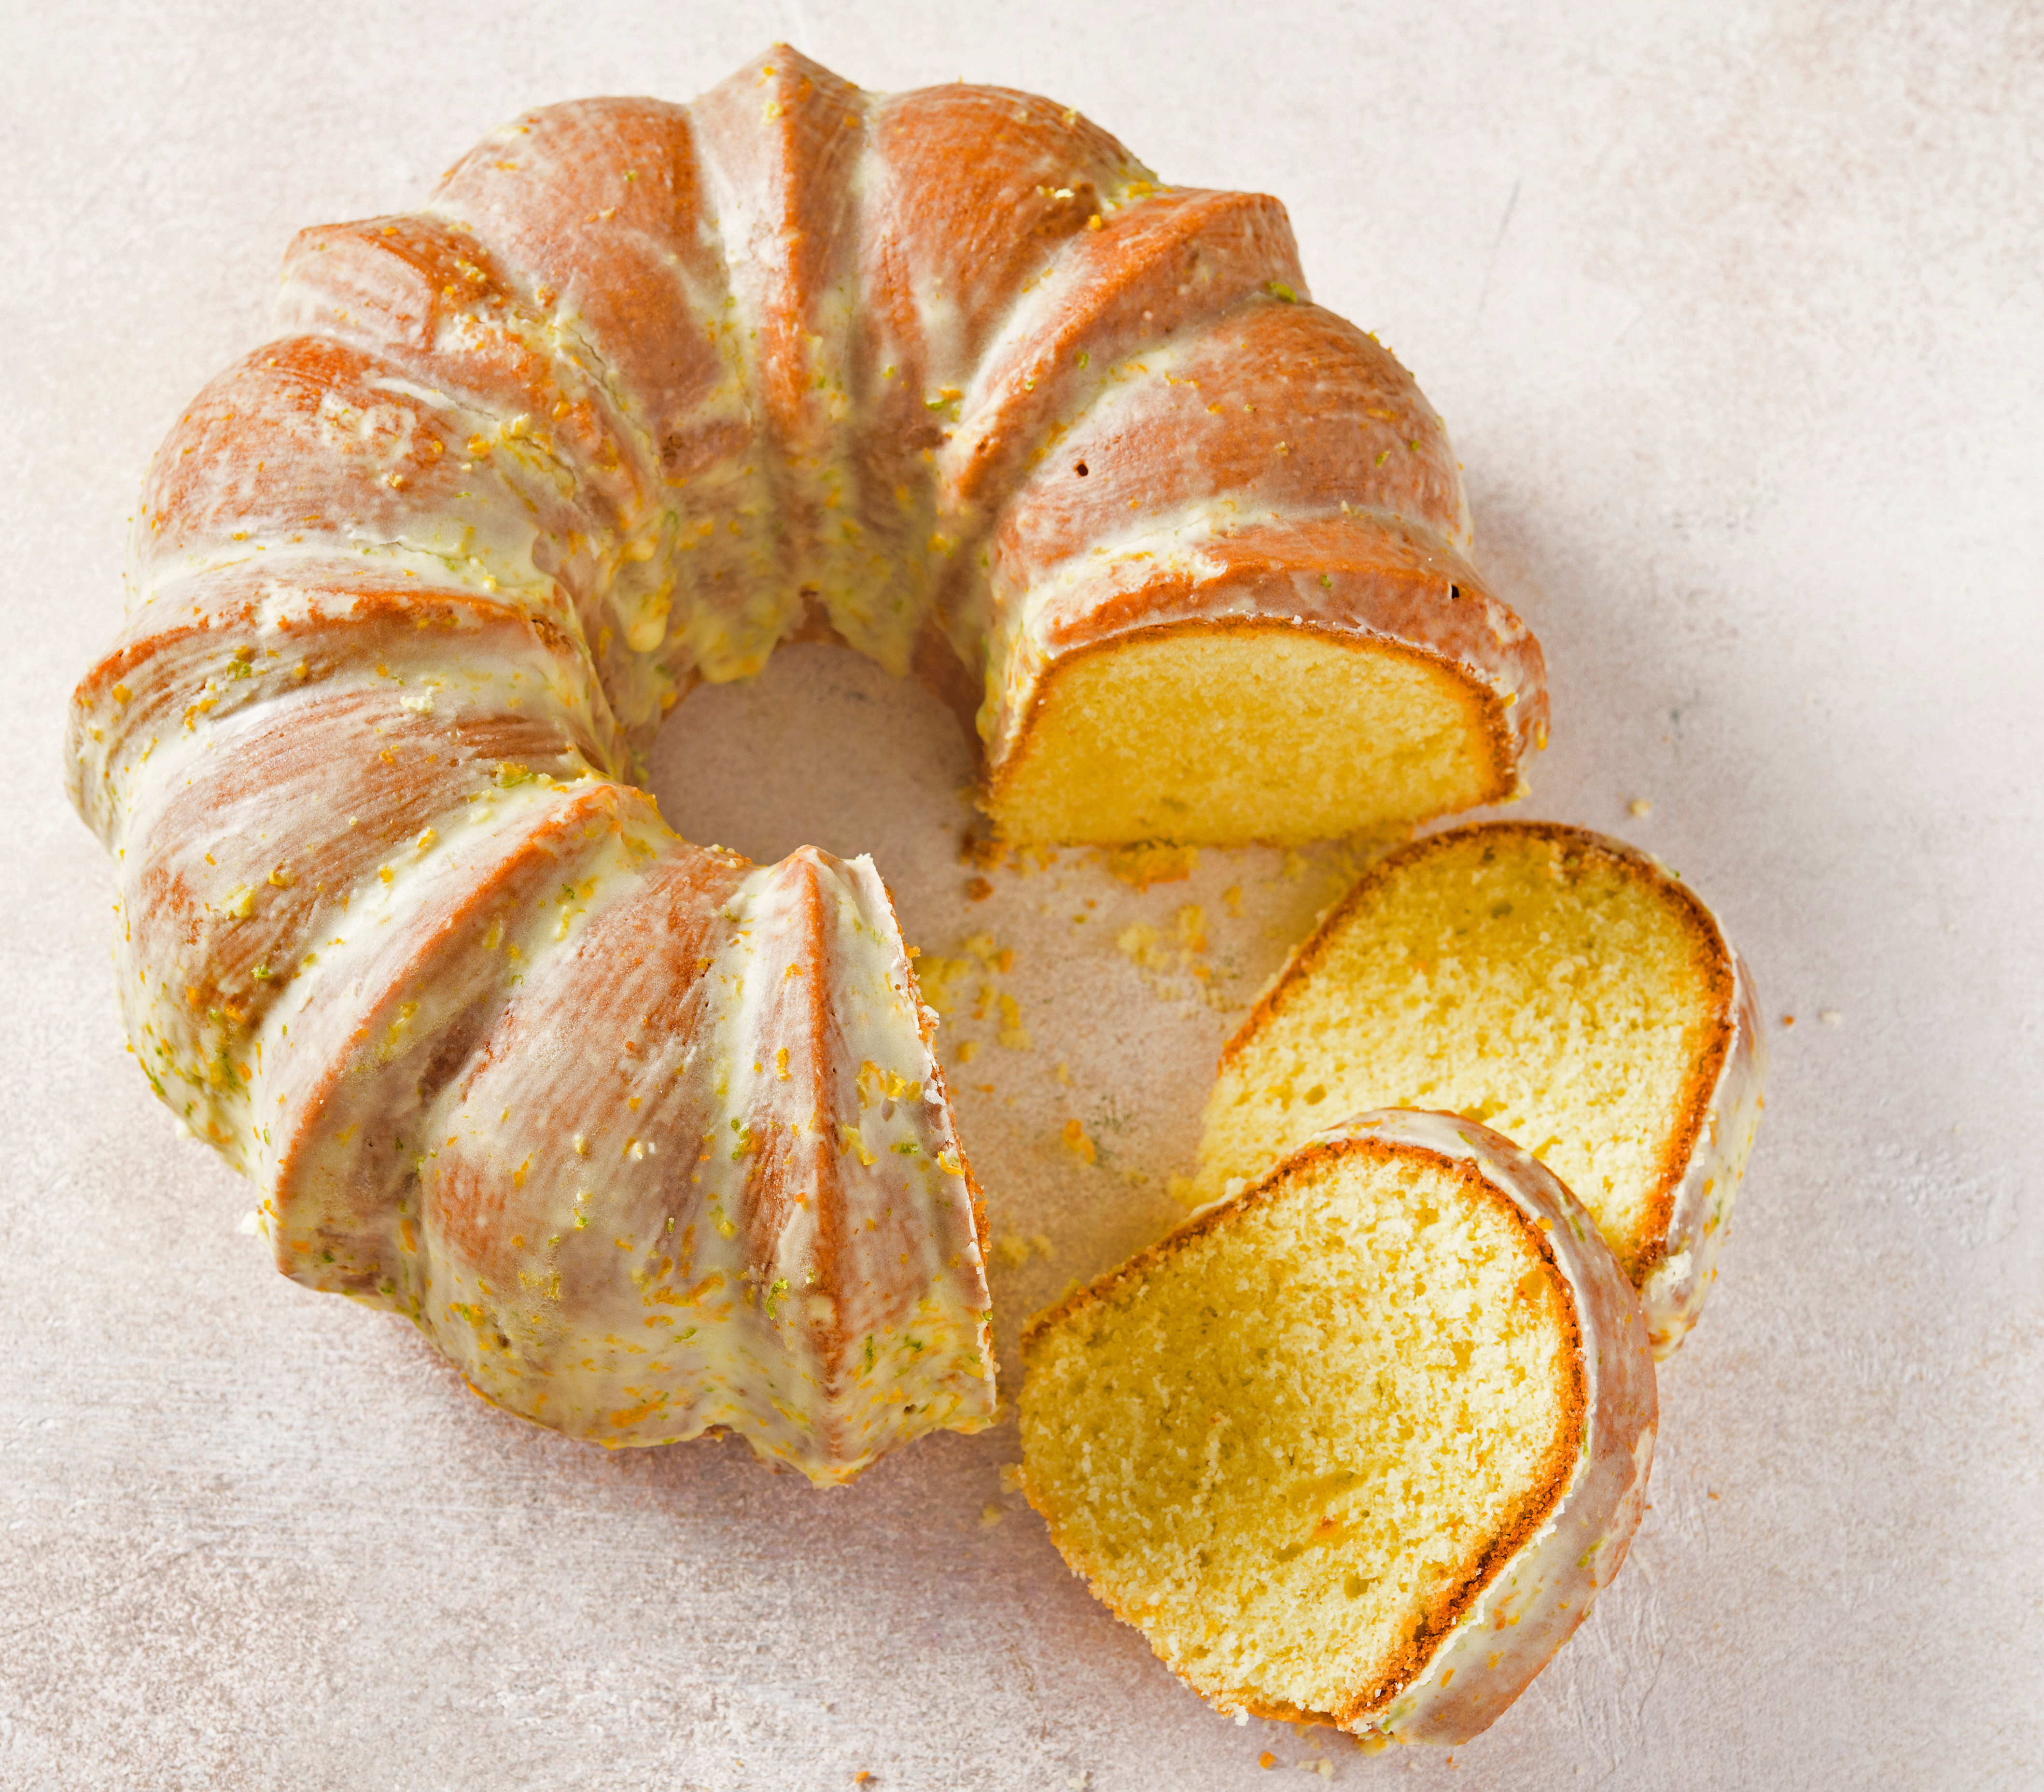 https://www.177milkstreet.com/assets/site/Recipes/Glazed-Three-Citrus-Almond-Bundt-Cake.jpg